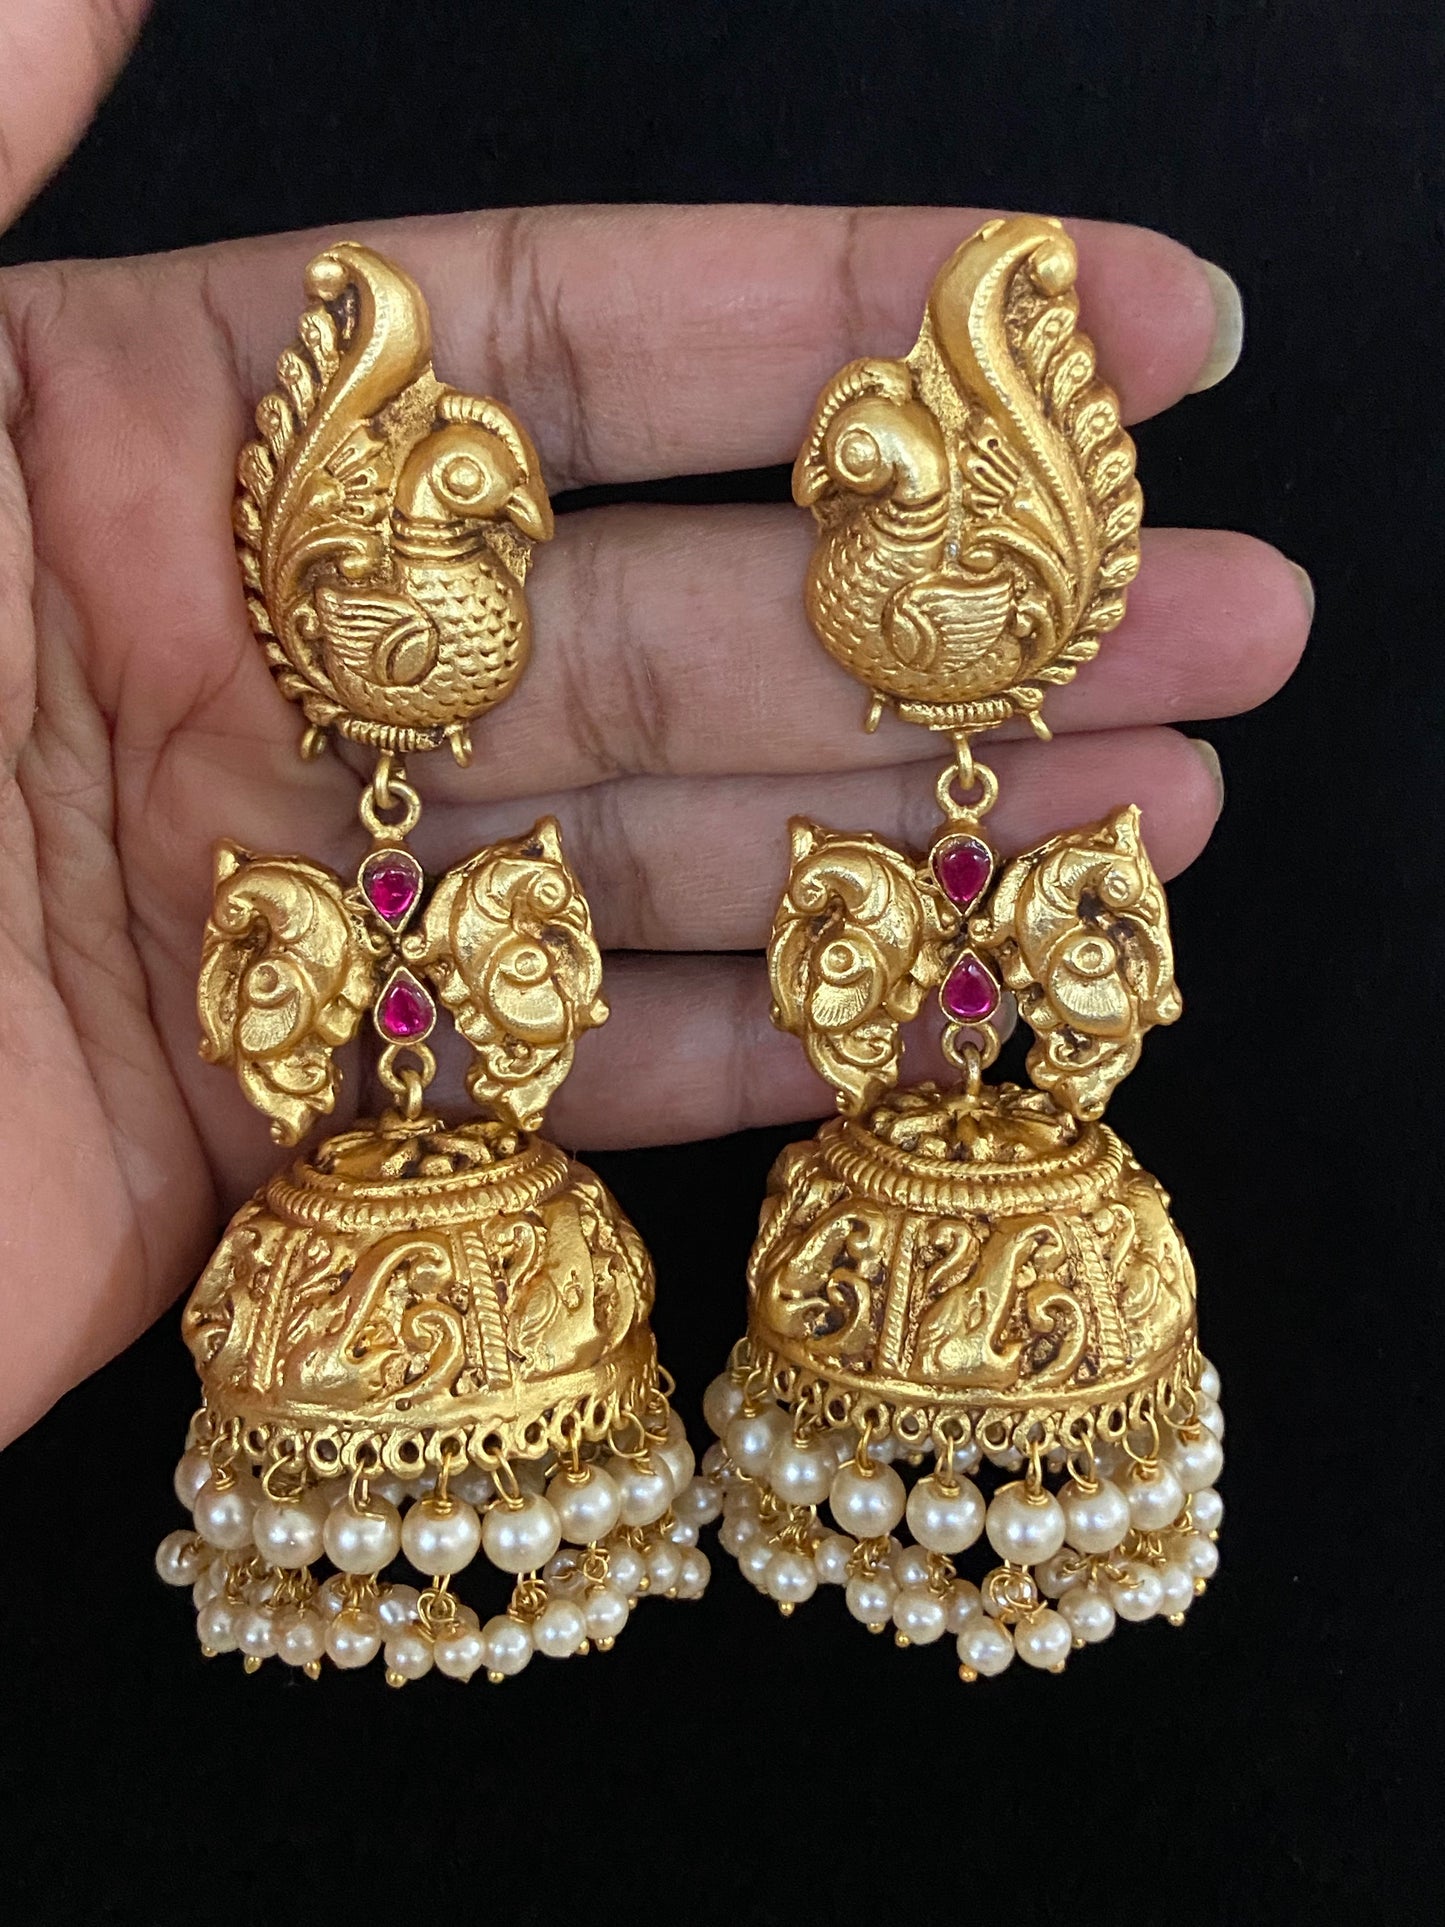 Big traditional earrings | Big jumki | Antique jumki